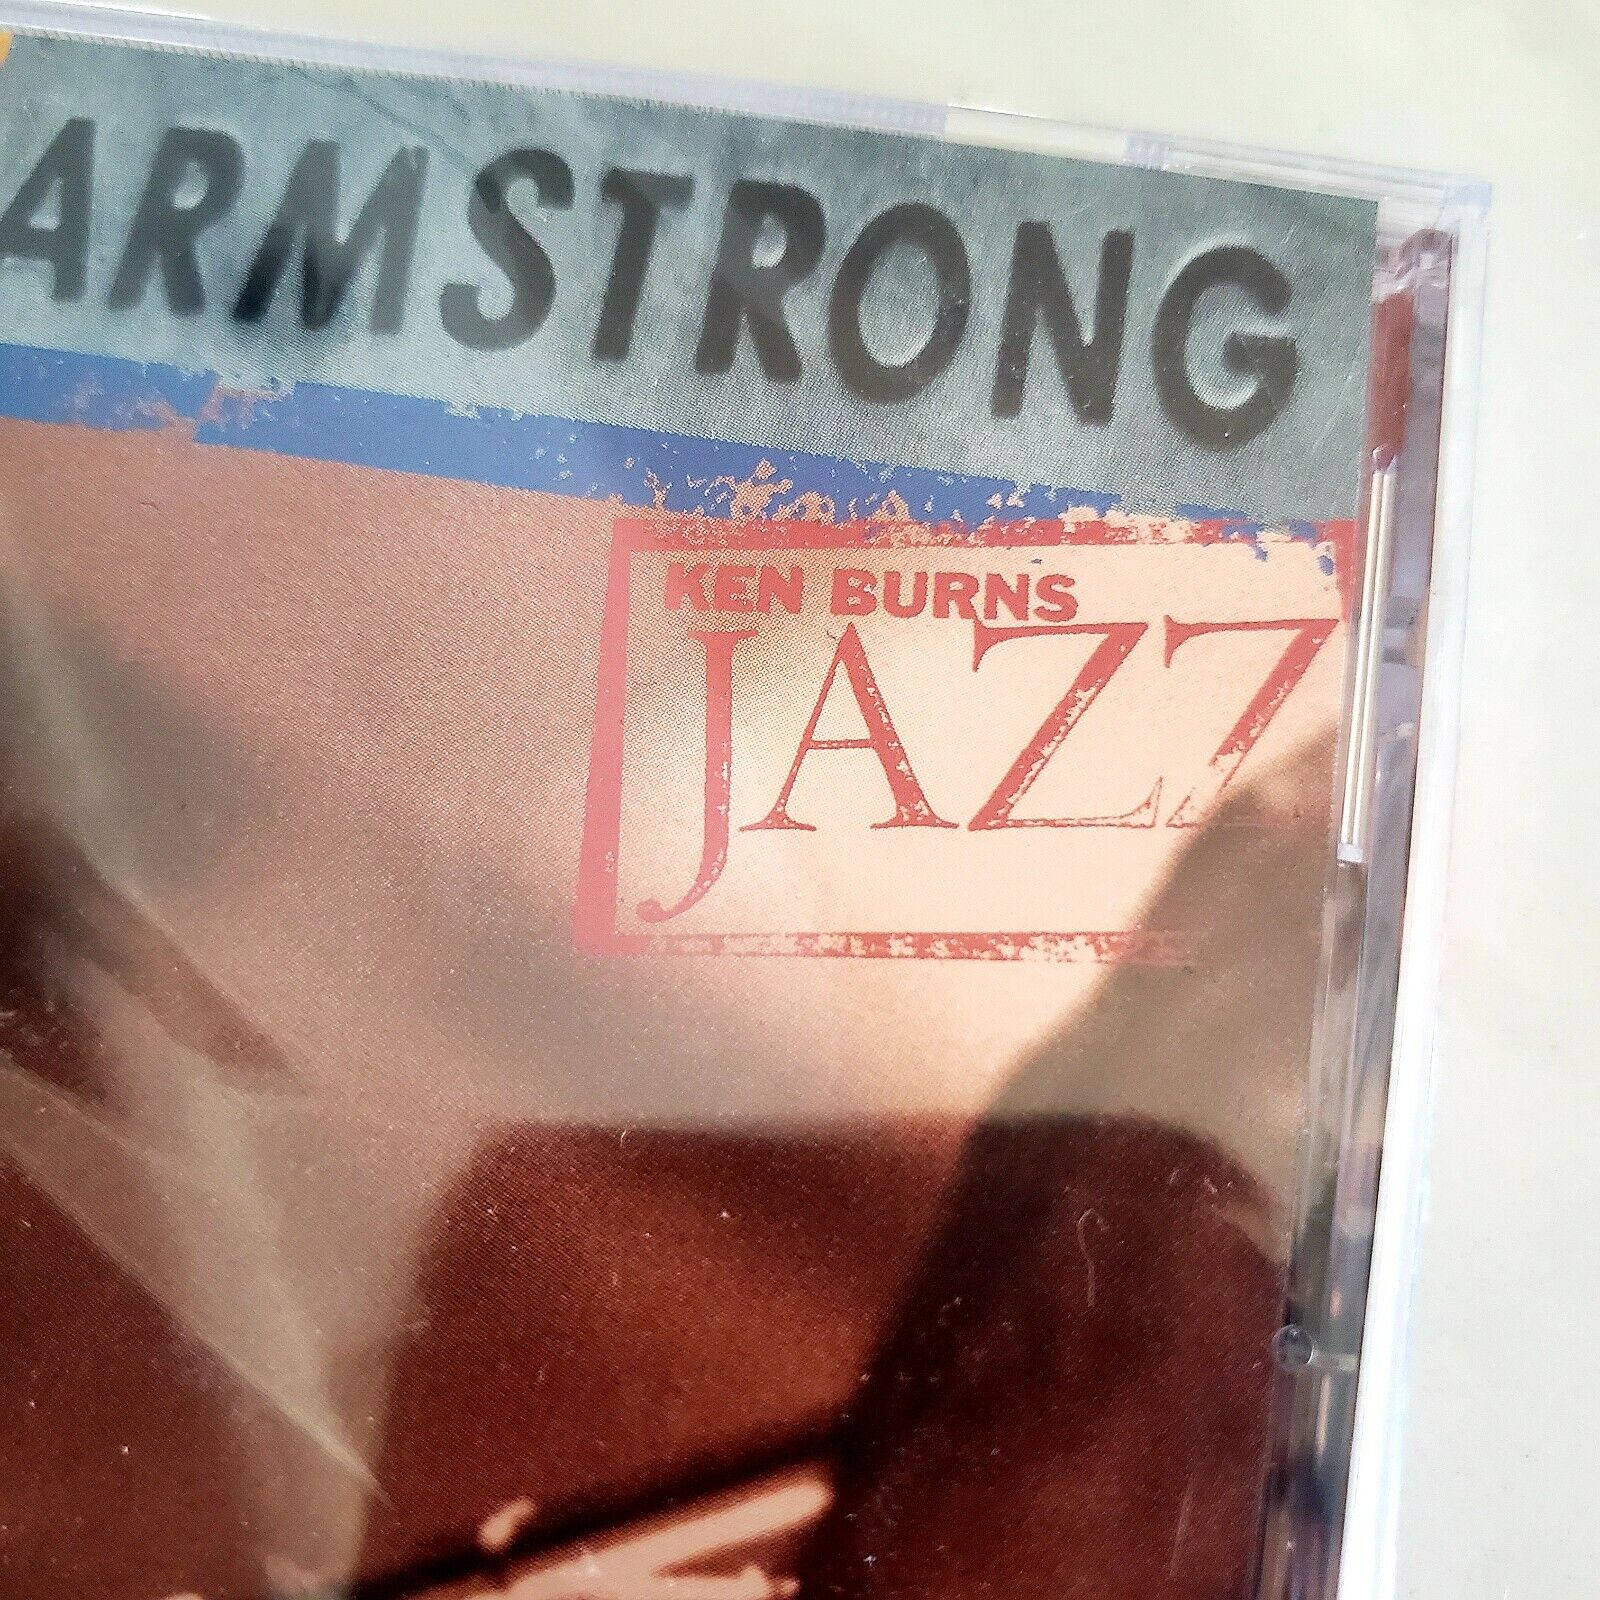 Louis Armstrong - CD - Ken Burns Jazz